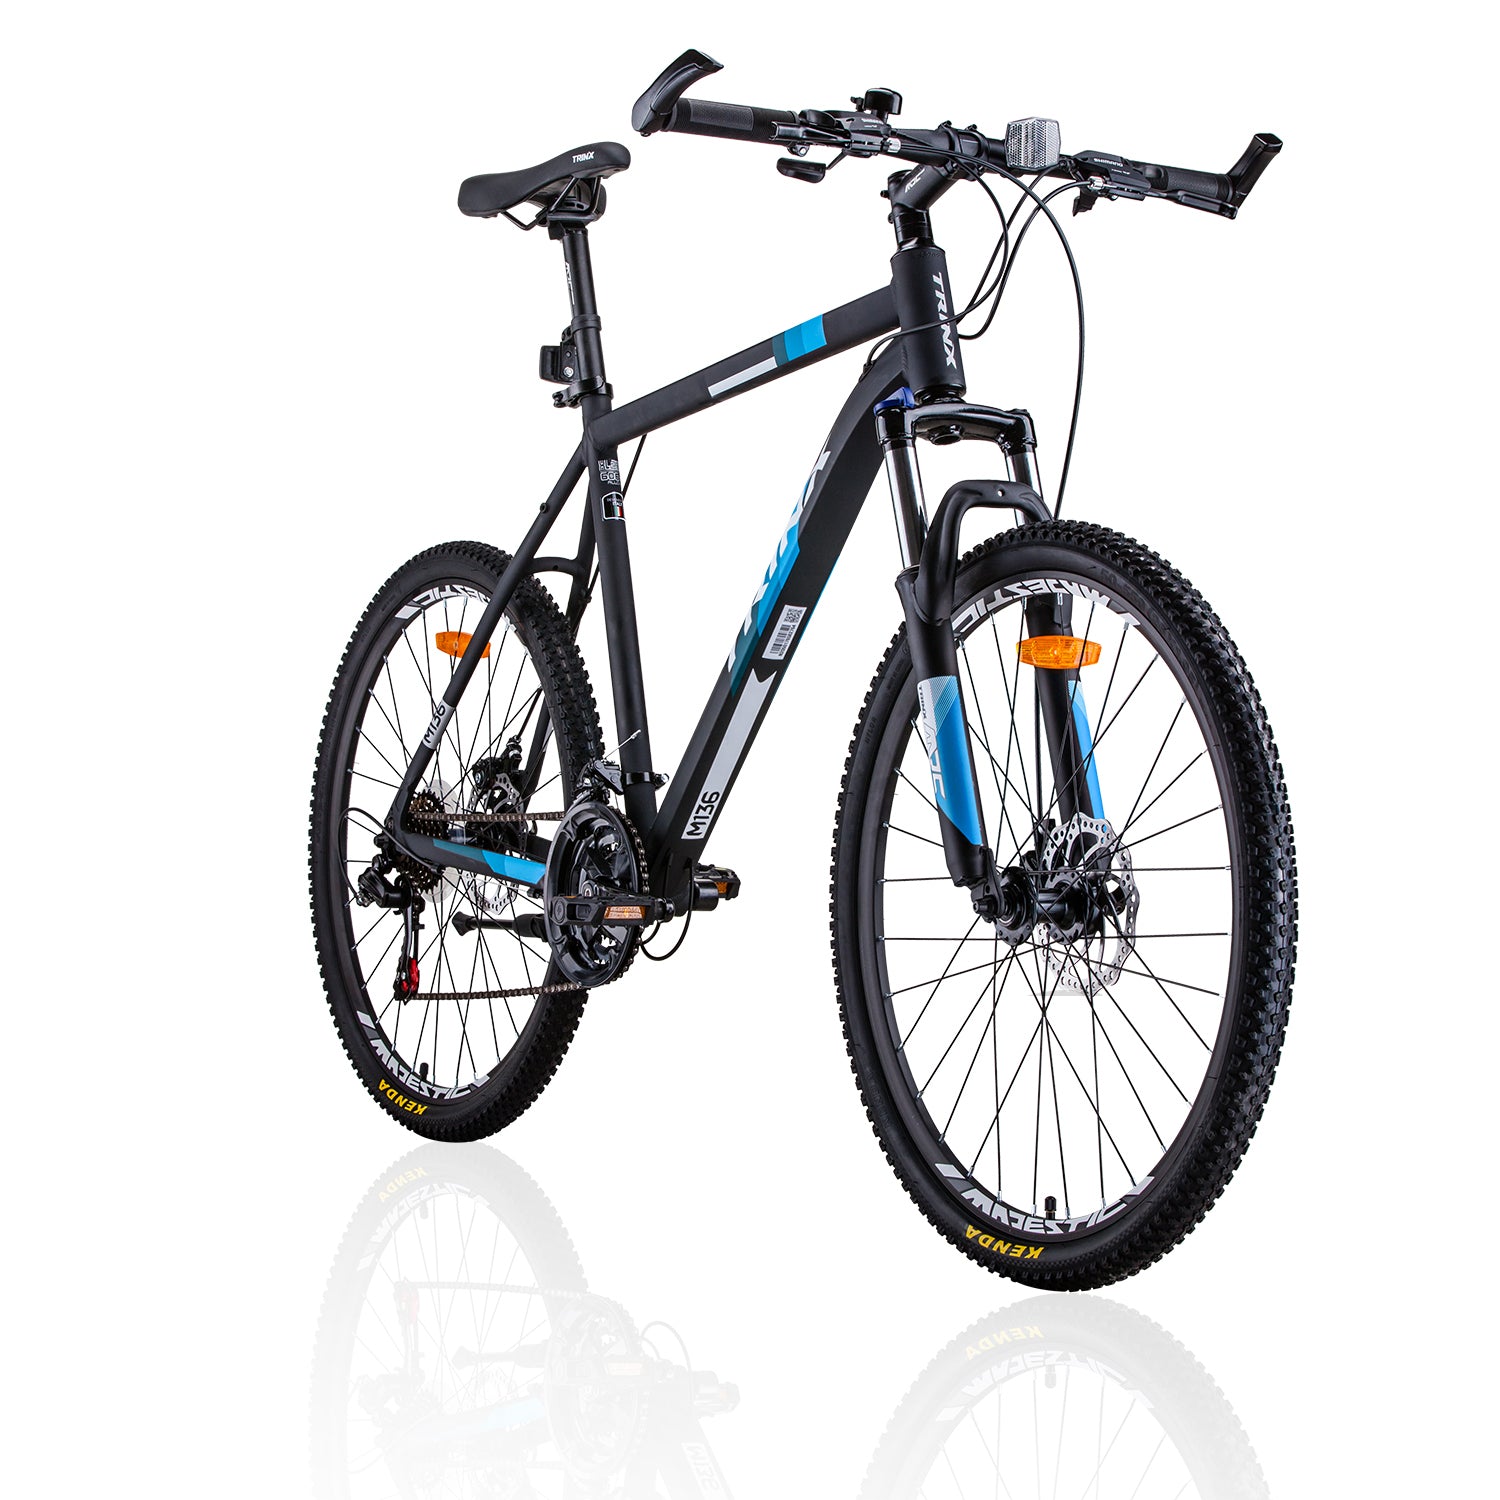 Trinx MTB Mens Mountain Bike 26 inch Shimano Gear 21-Speed [Colour: Matt Black White/Blue] [Size Of Frame: 21 inches]